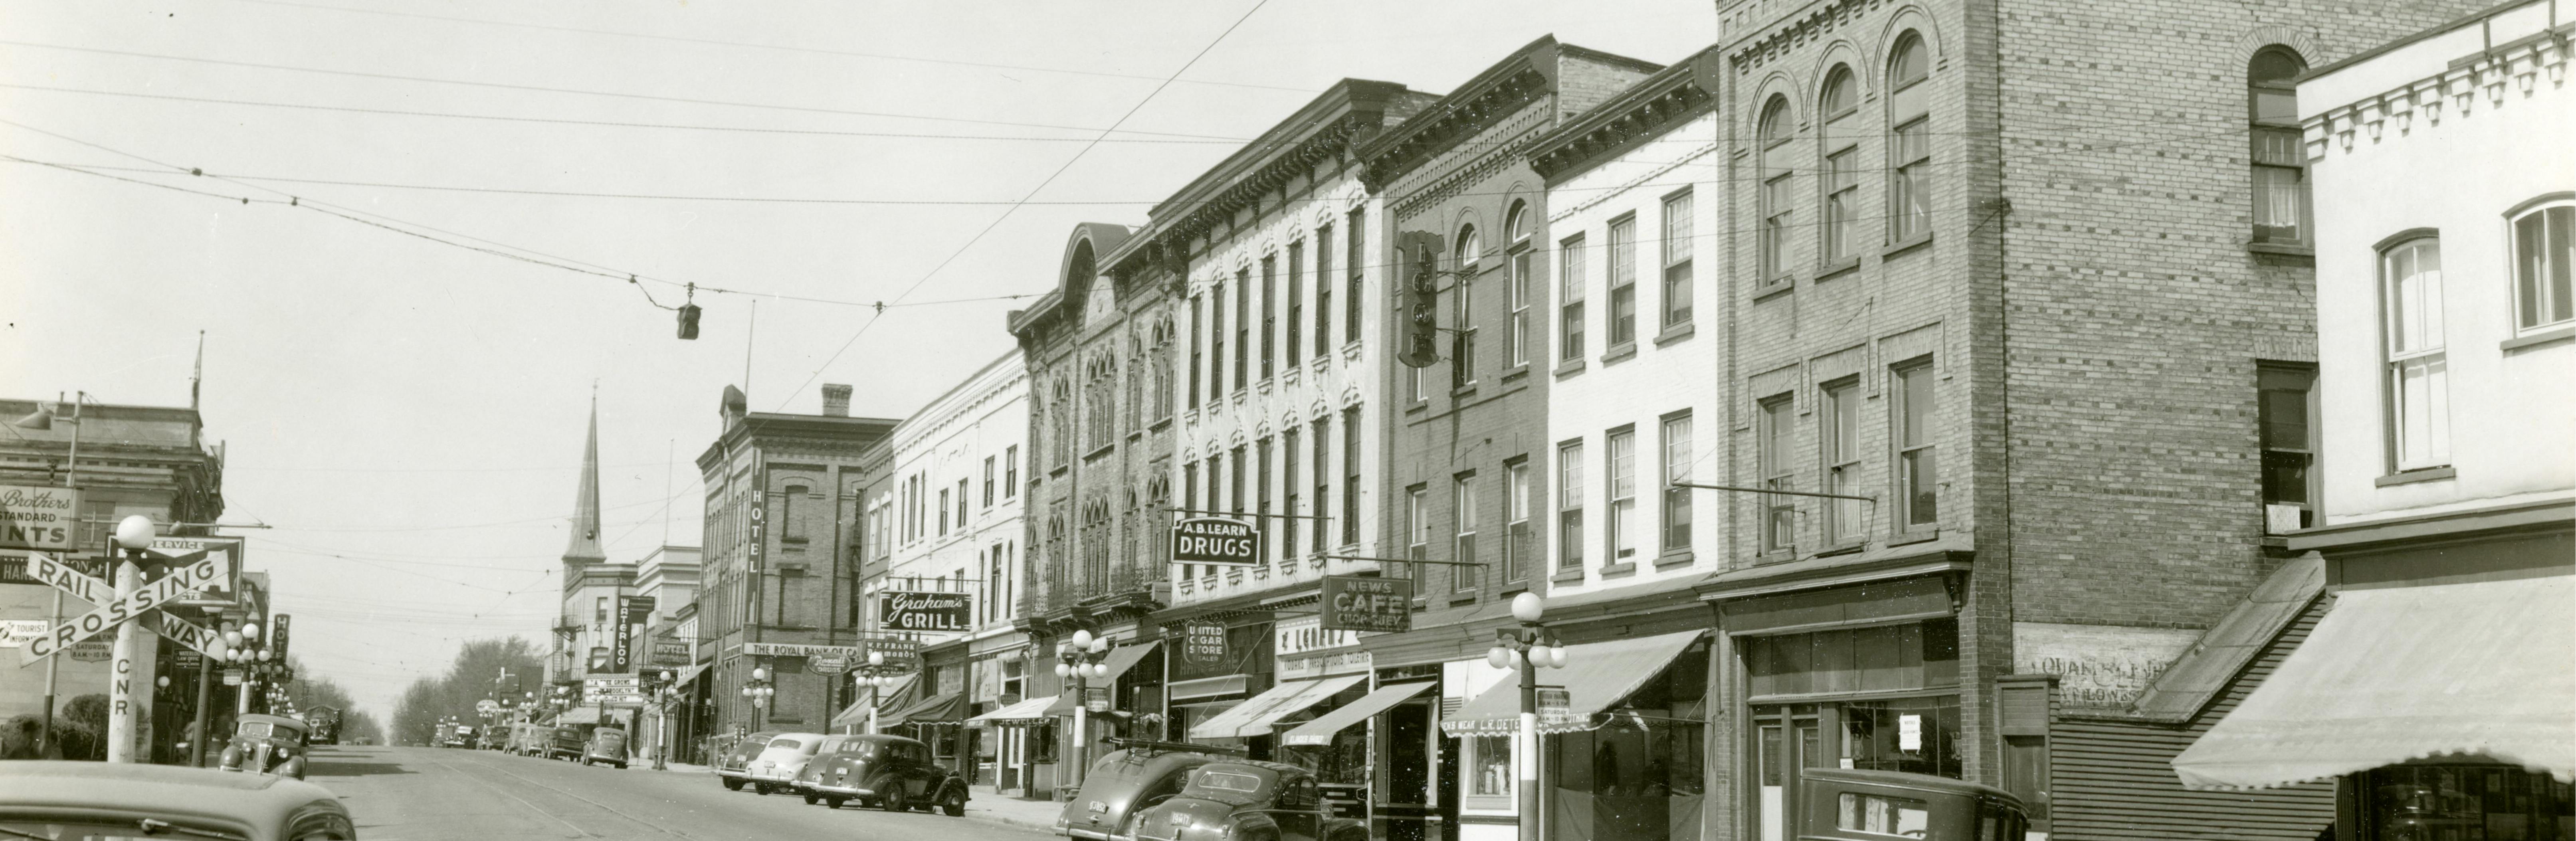 Photo of King Street, Uptown Waterloo circa 1940s